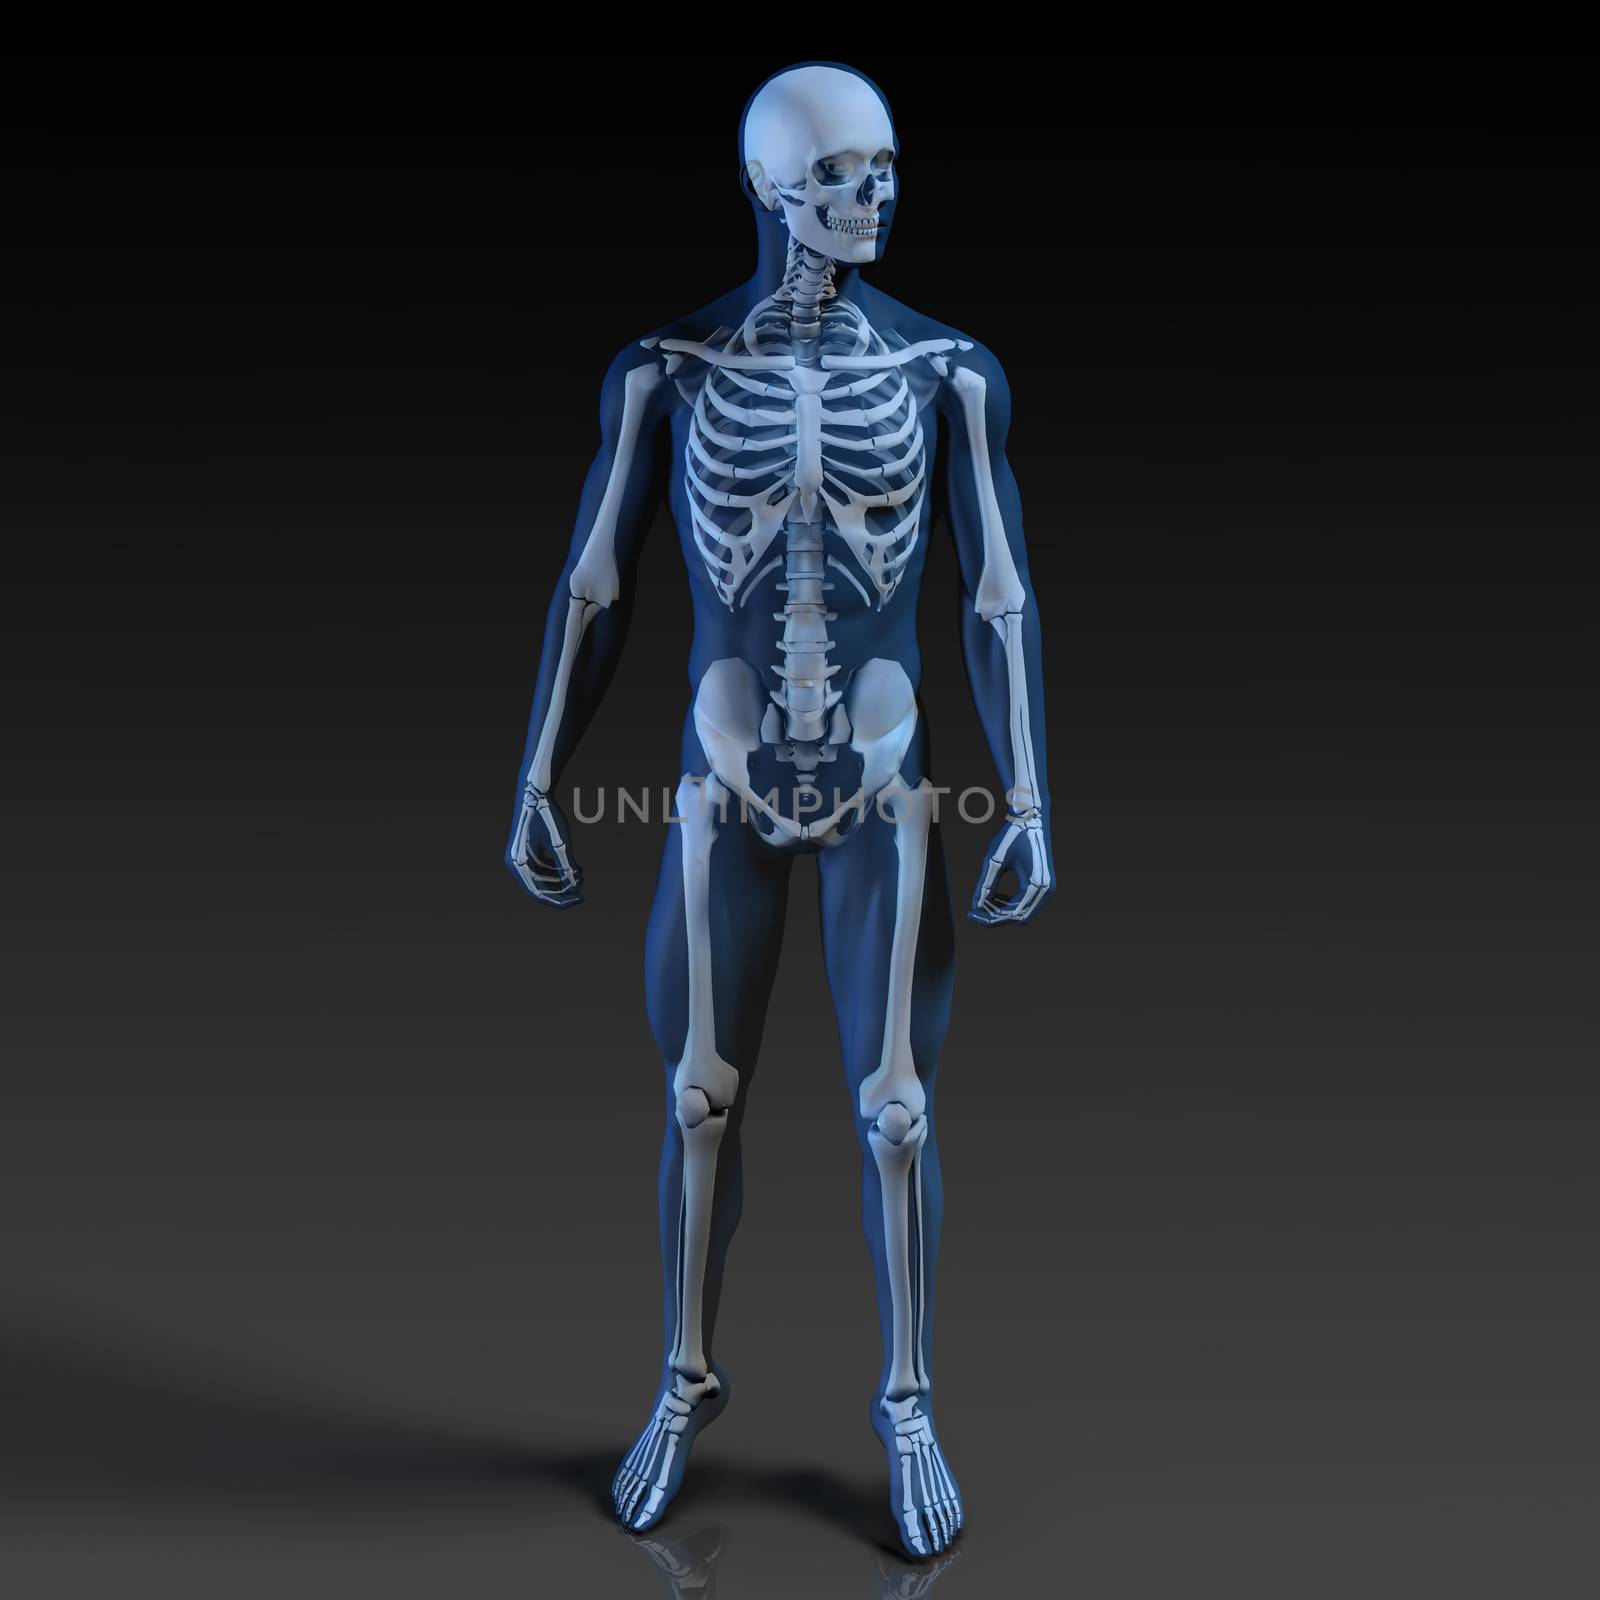 Human Body and Skeleton Anatomy by kentoh